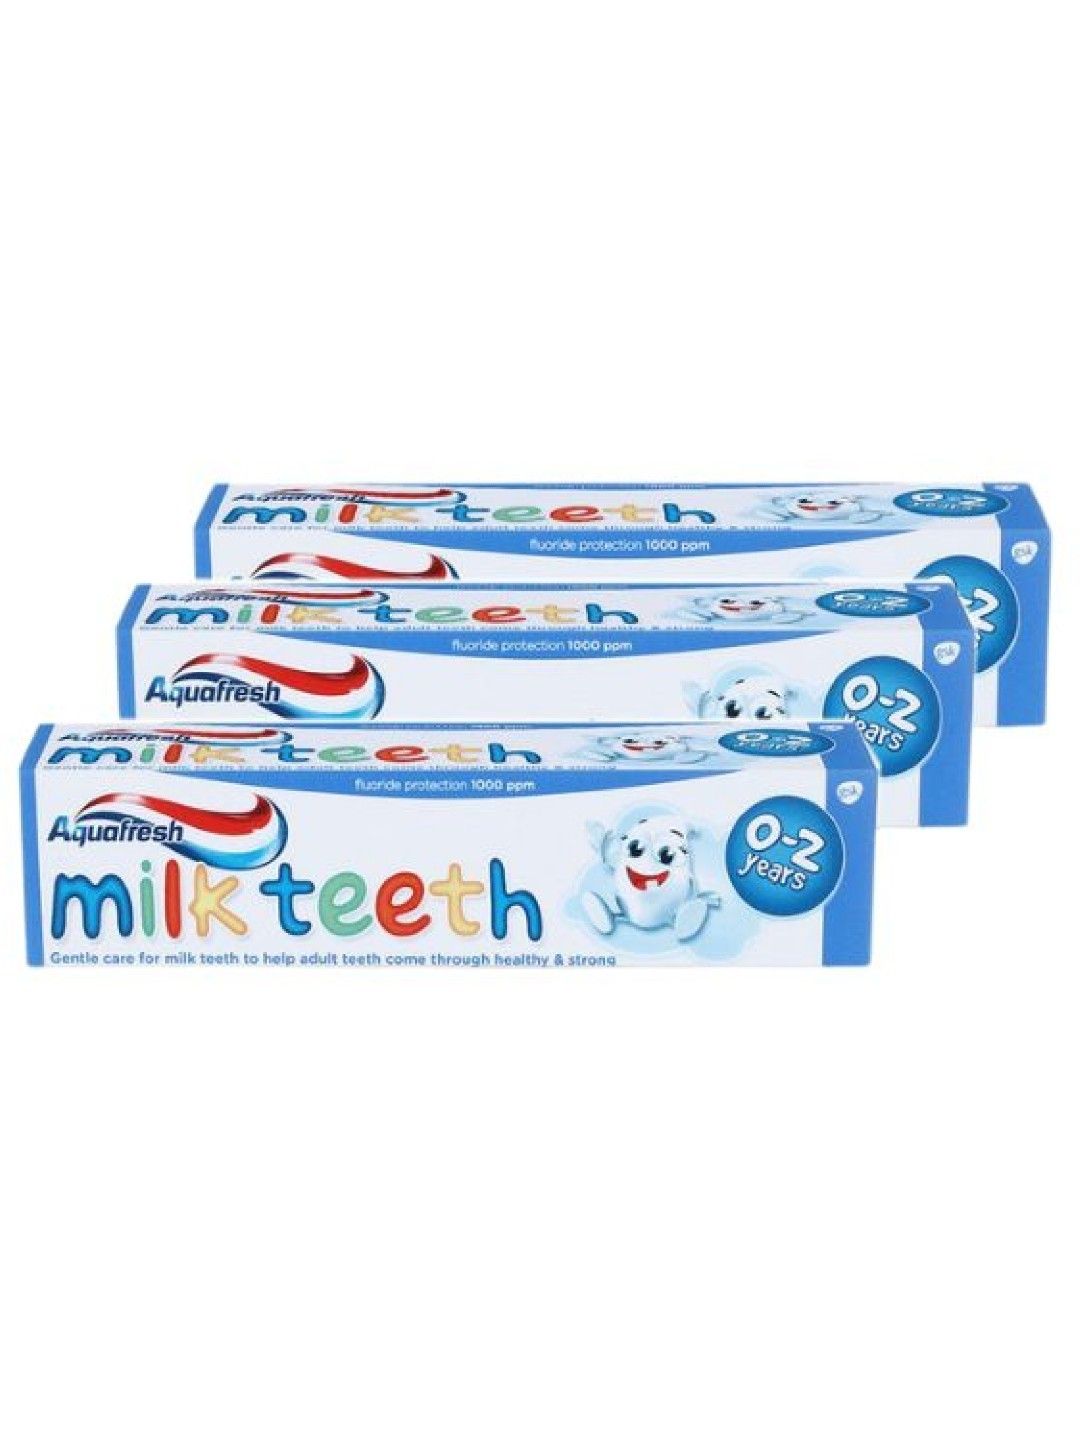 Aquafresh Milk Teeth Toothpaste 50ml x 3